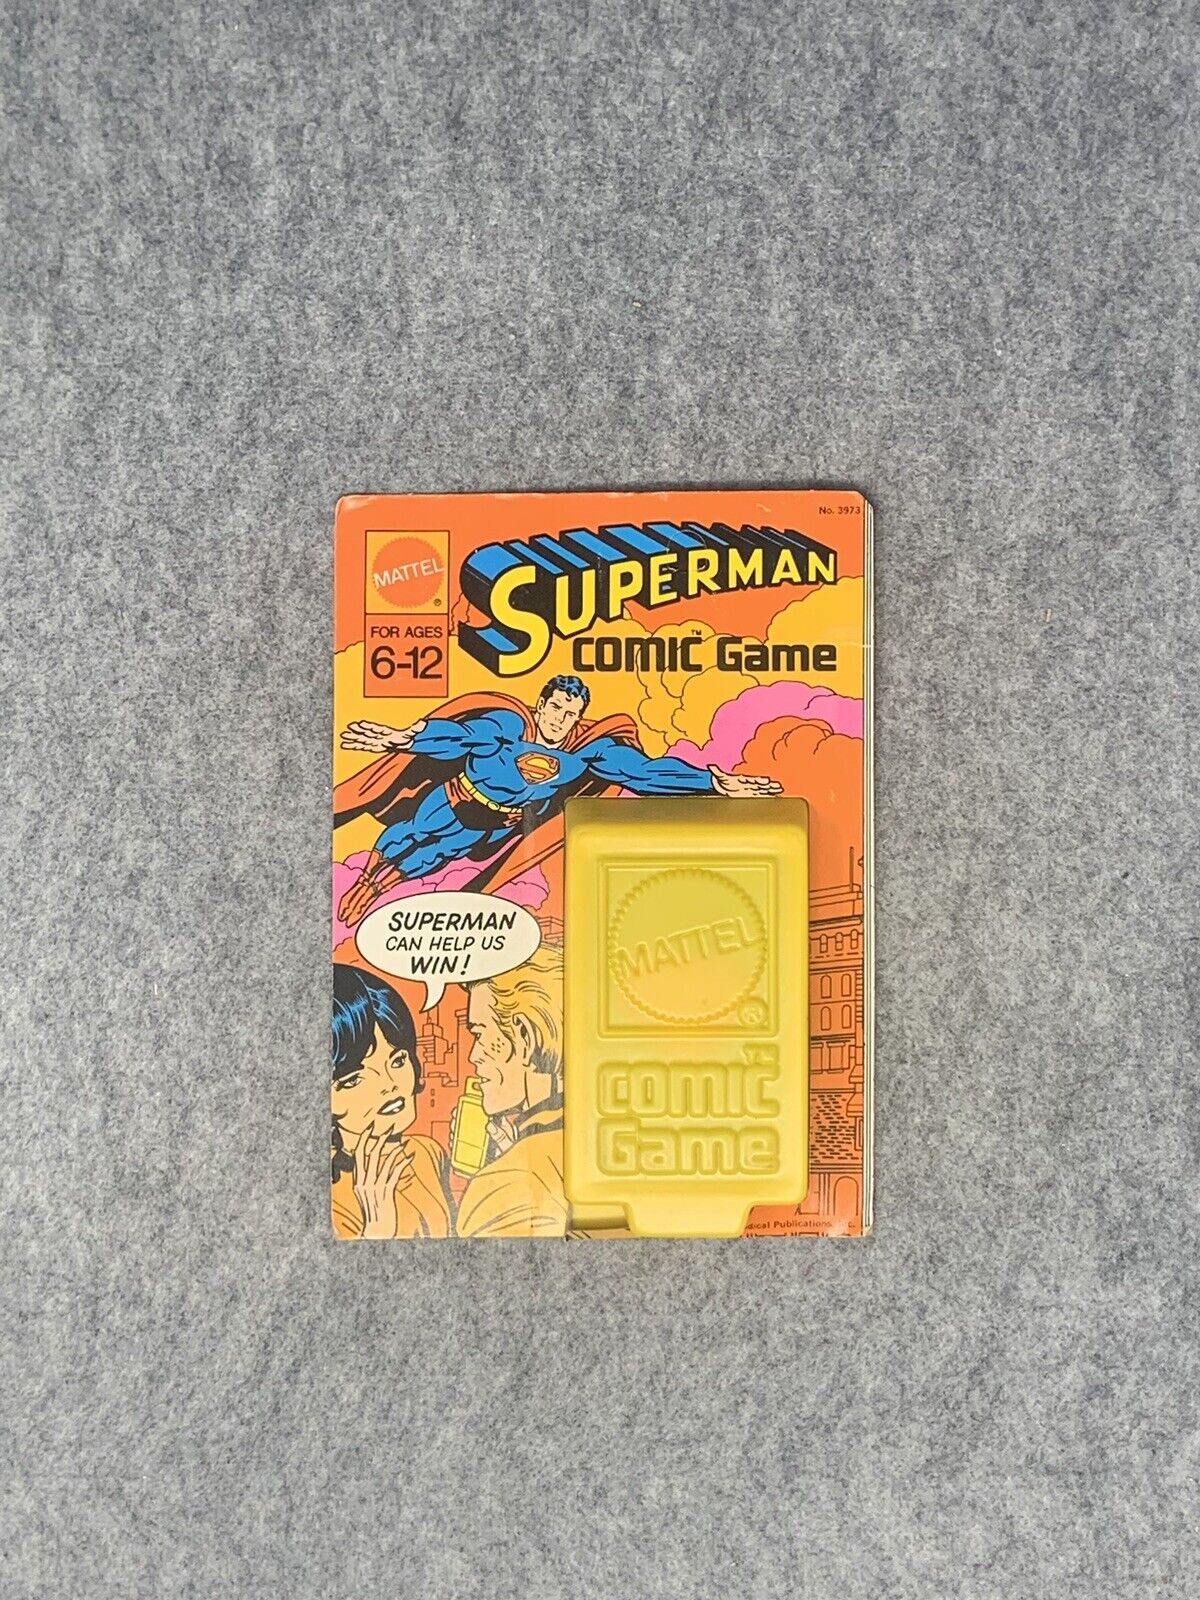 *RARE* FACTORY SEALED 1971 MATTEL DC COMICS SUPERMAN COMIC CARD GAME JACK KIRBY